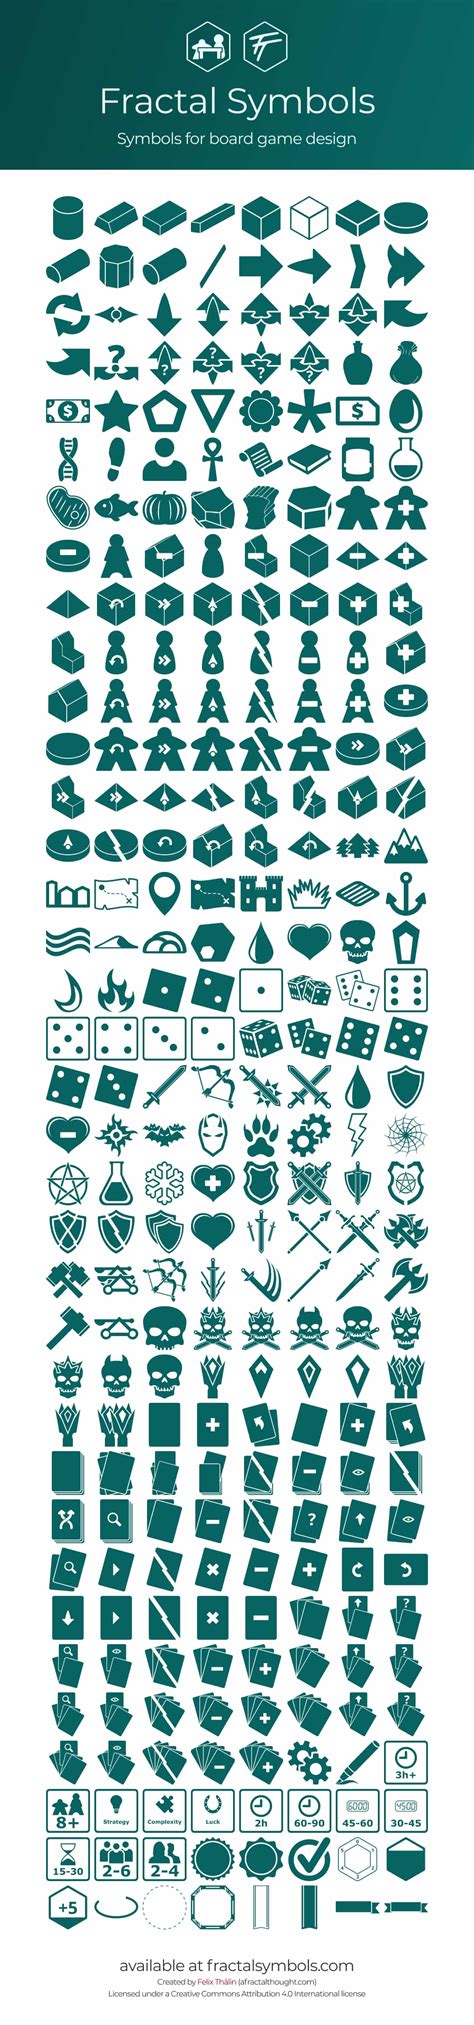 Fractal Symbols